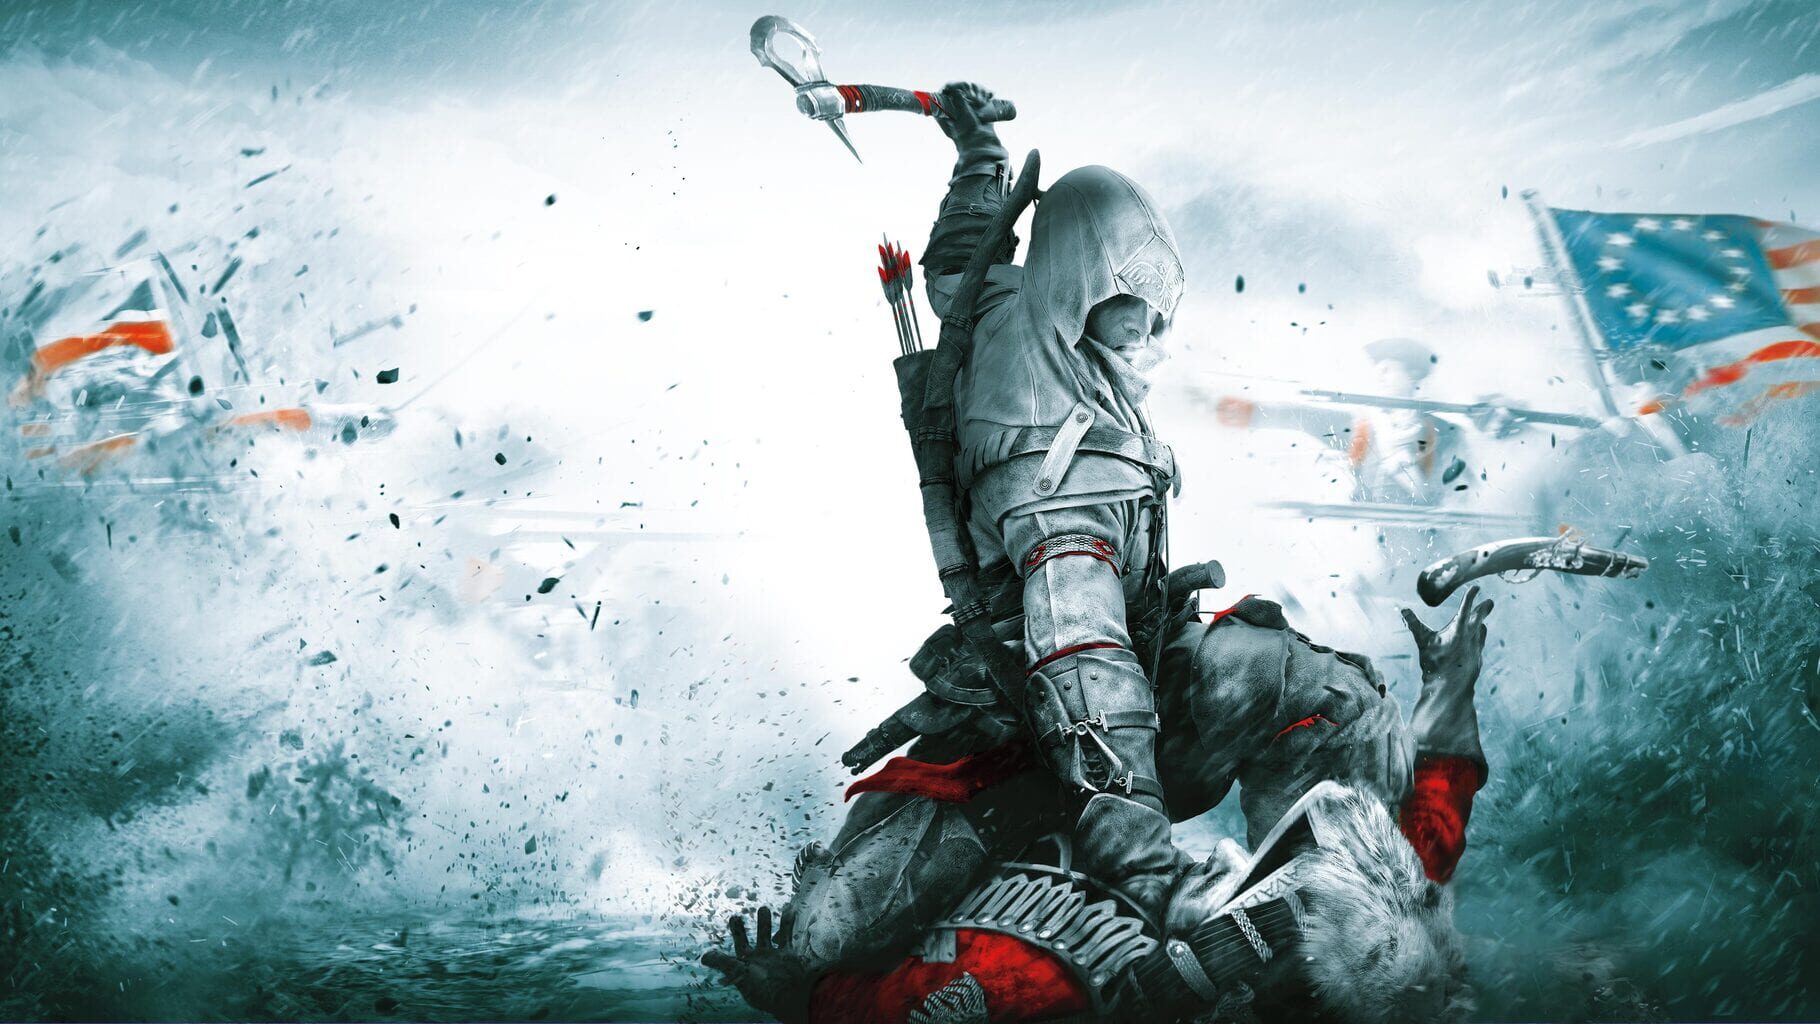 Arte - Assassin's Creed III Remastered